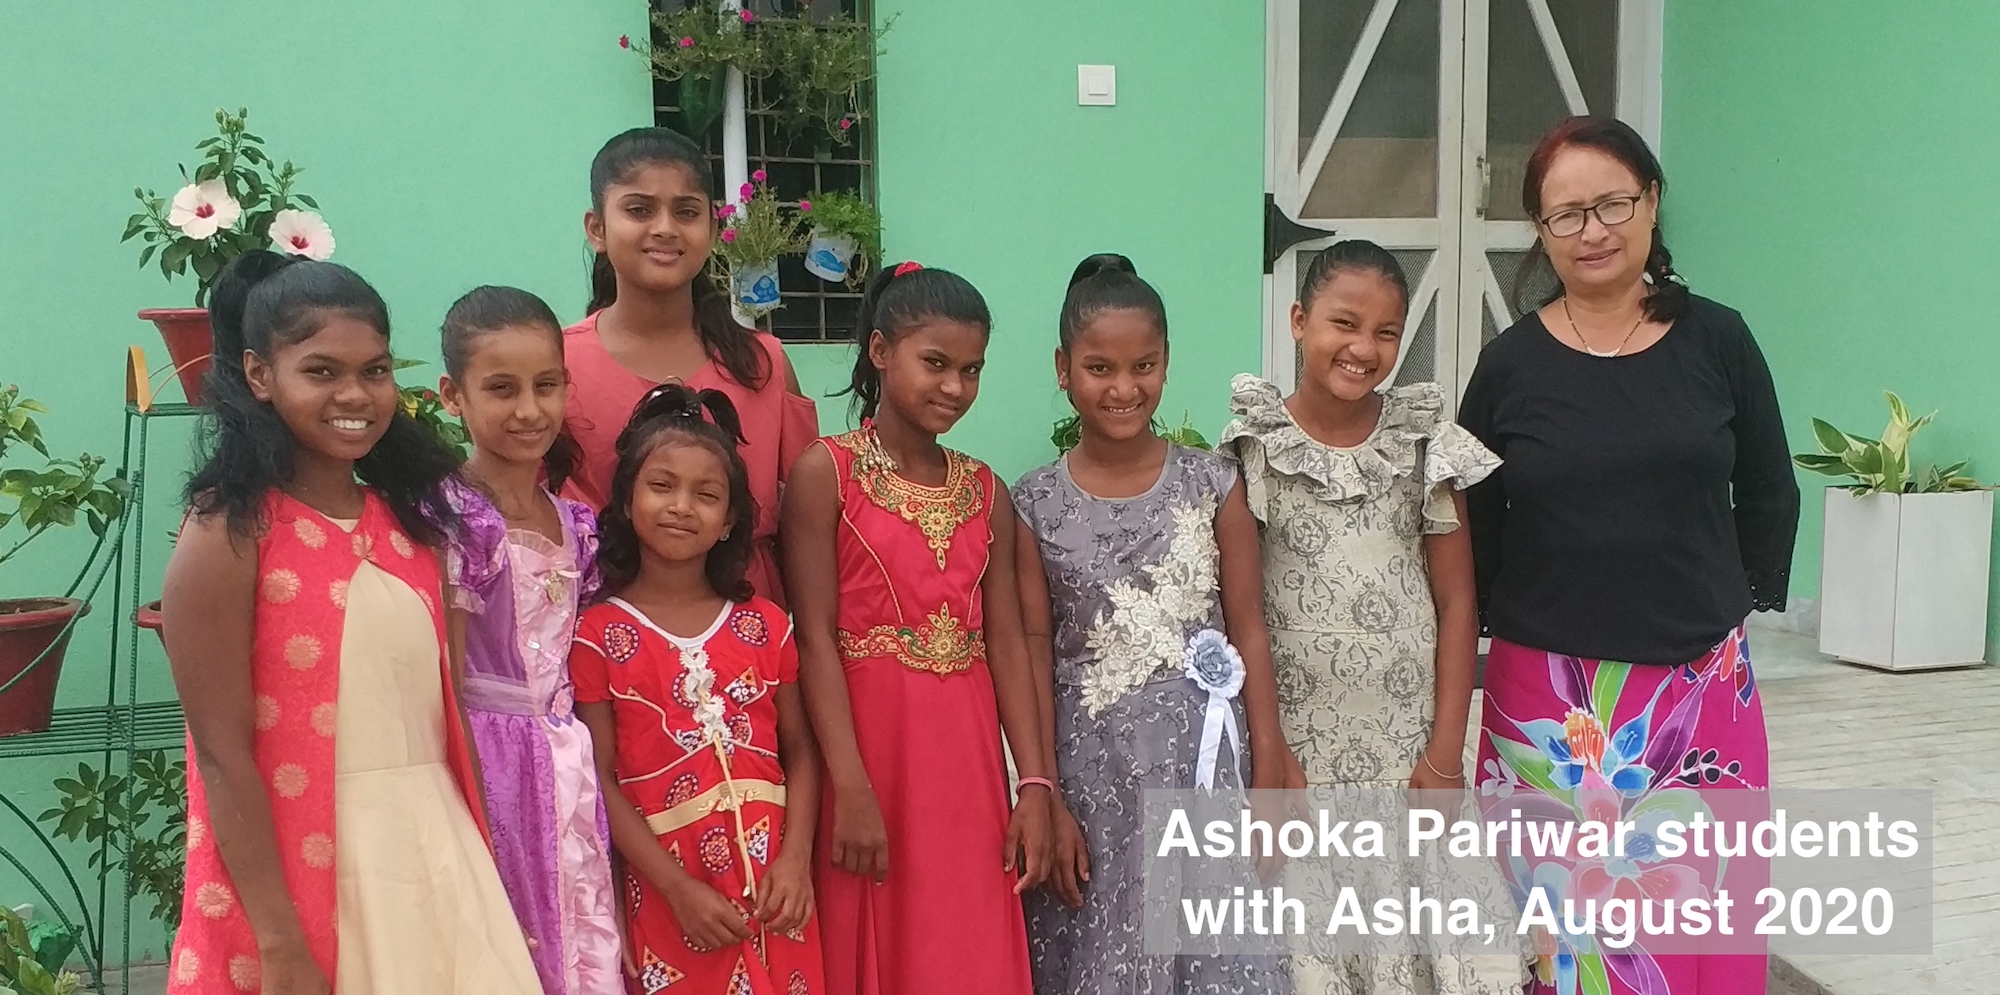 7 girls and Manager Asha Pradhan outside Ashoka Pariwar hostel, Lalgadh